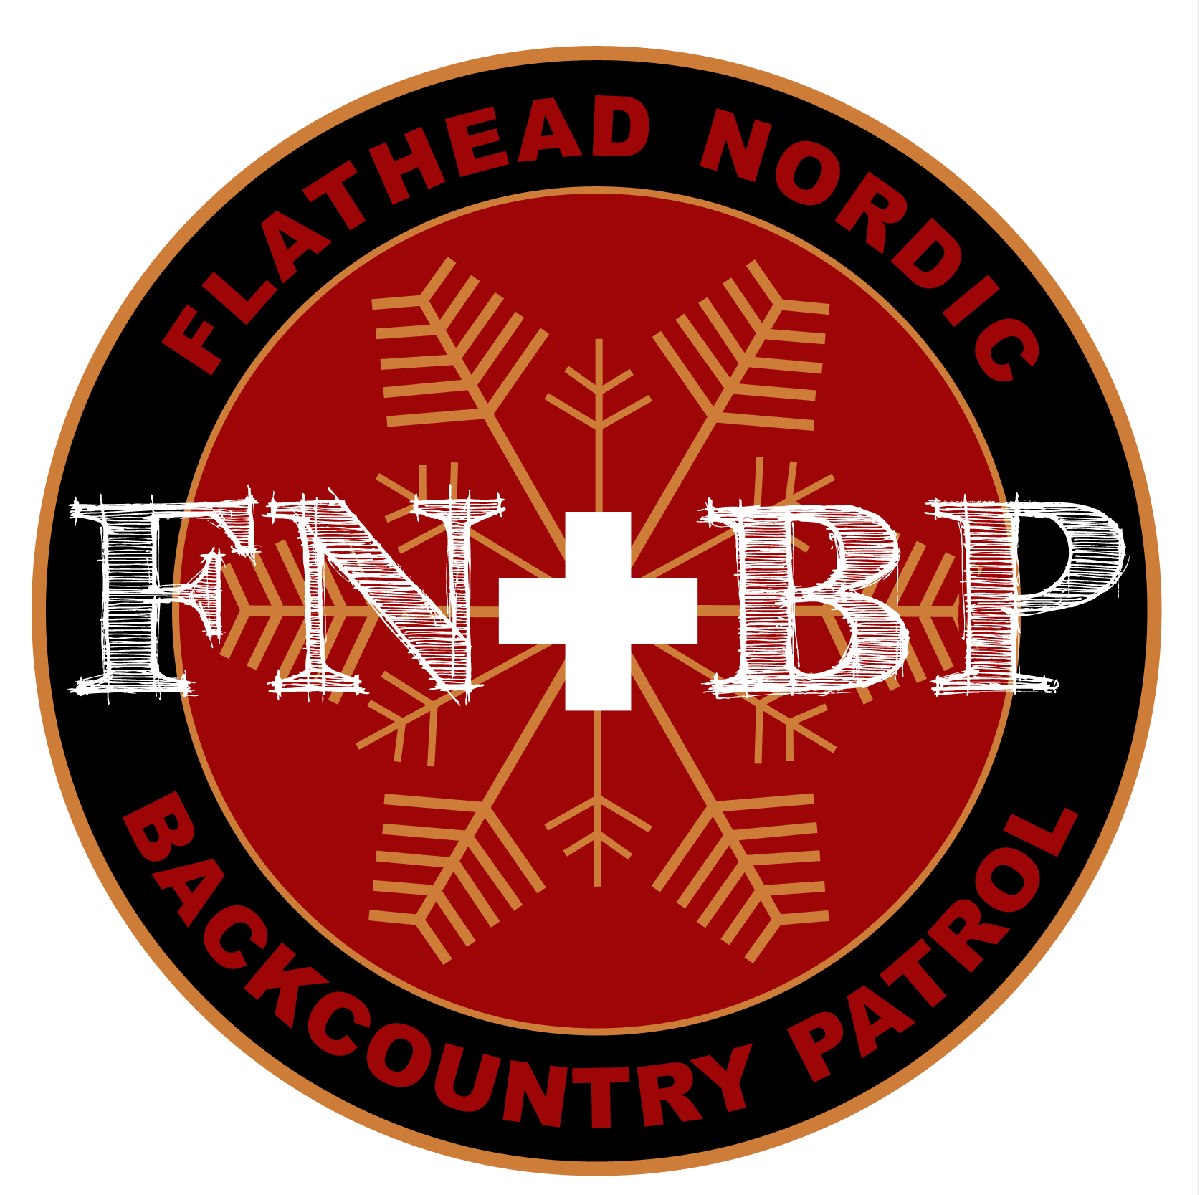 Flathead Nordic Backcountry Patrol